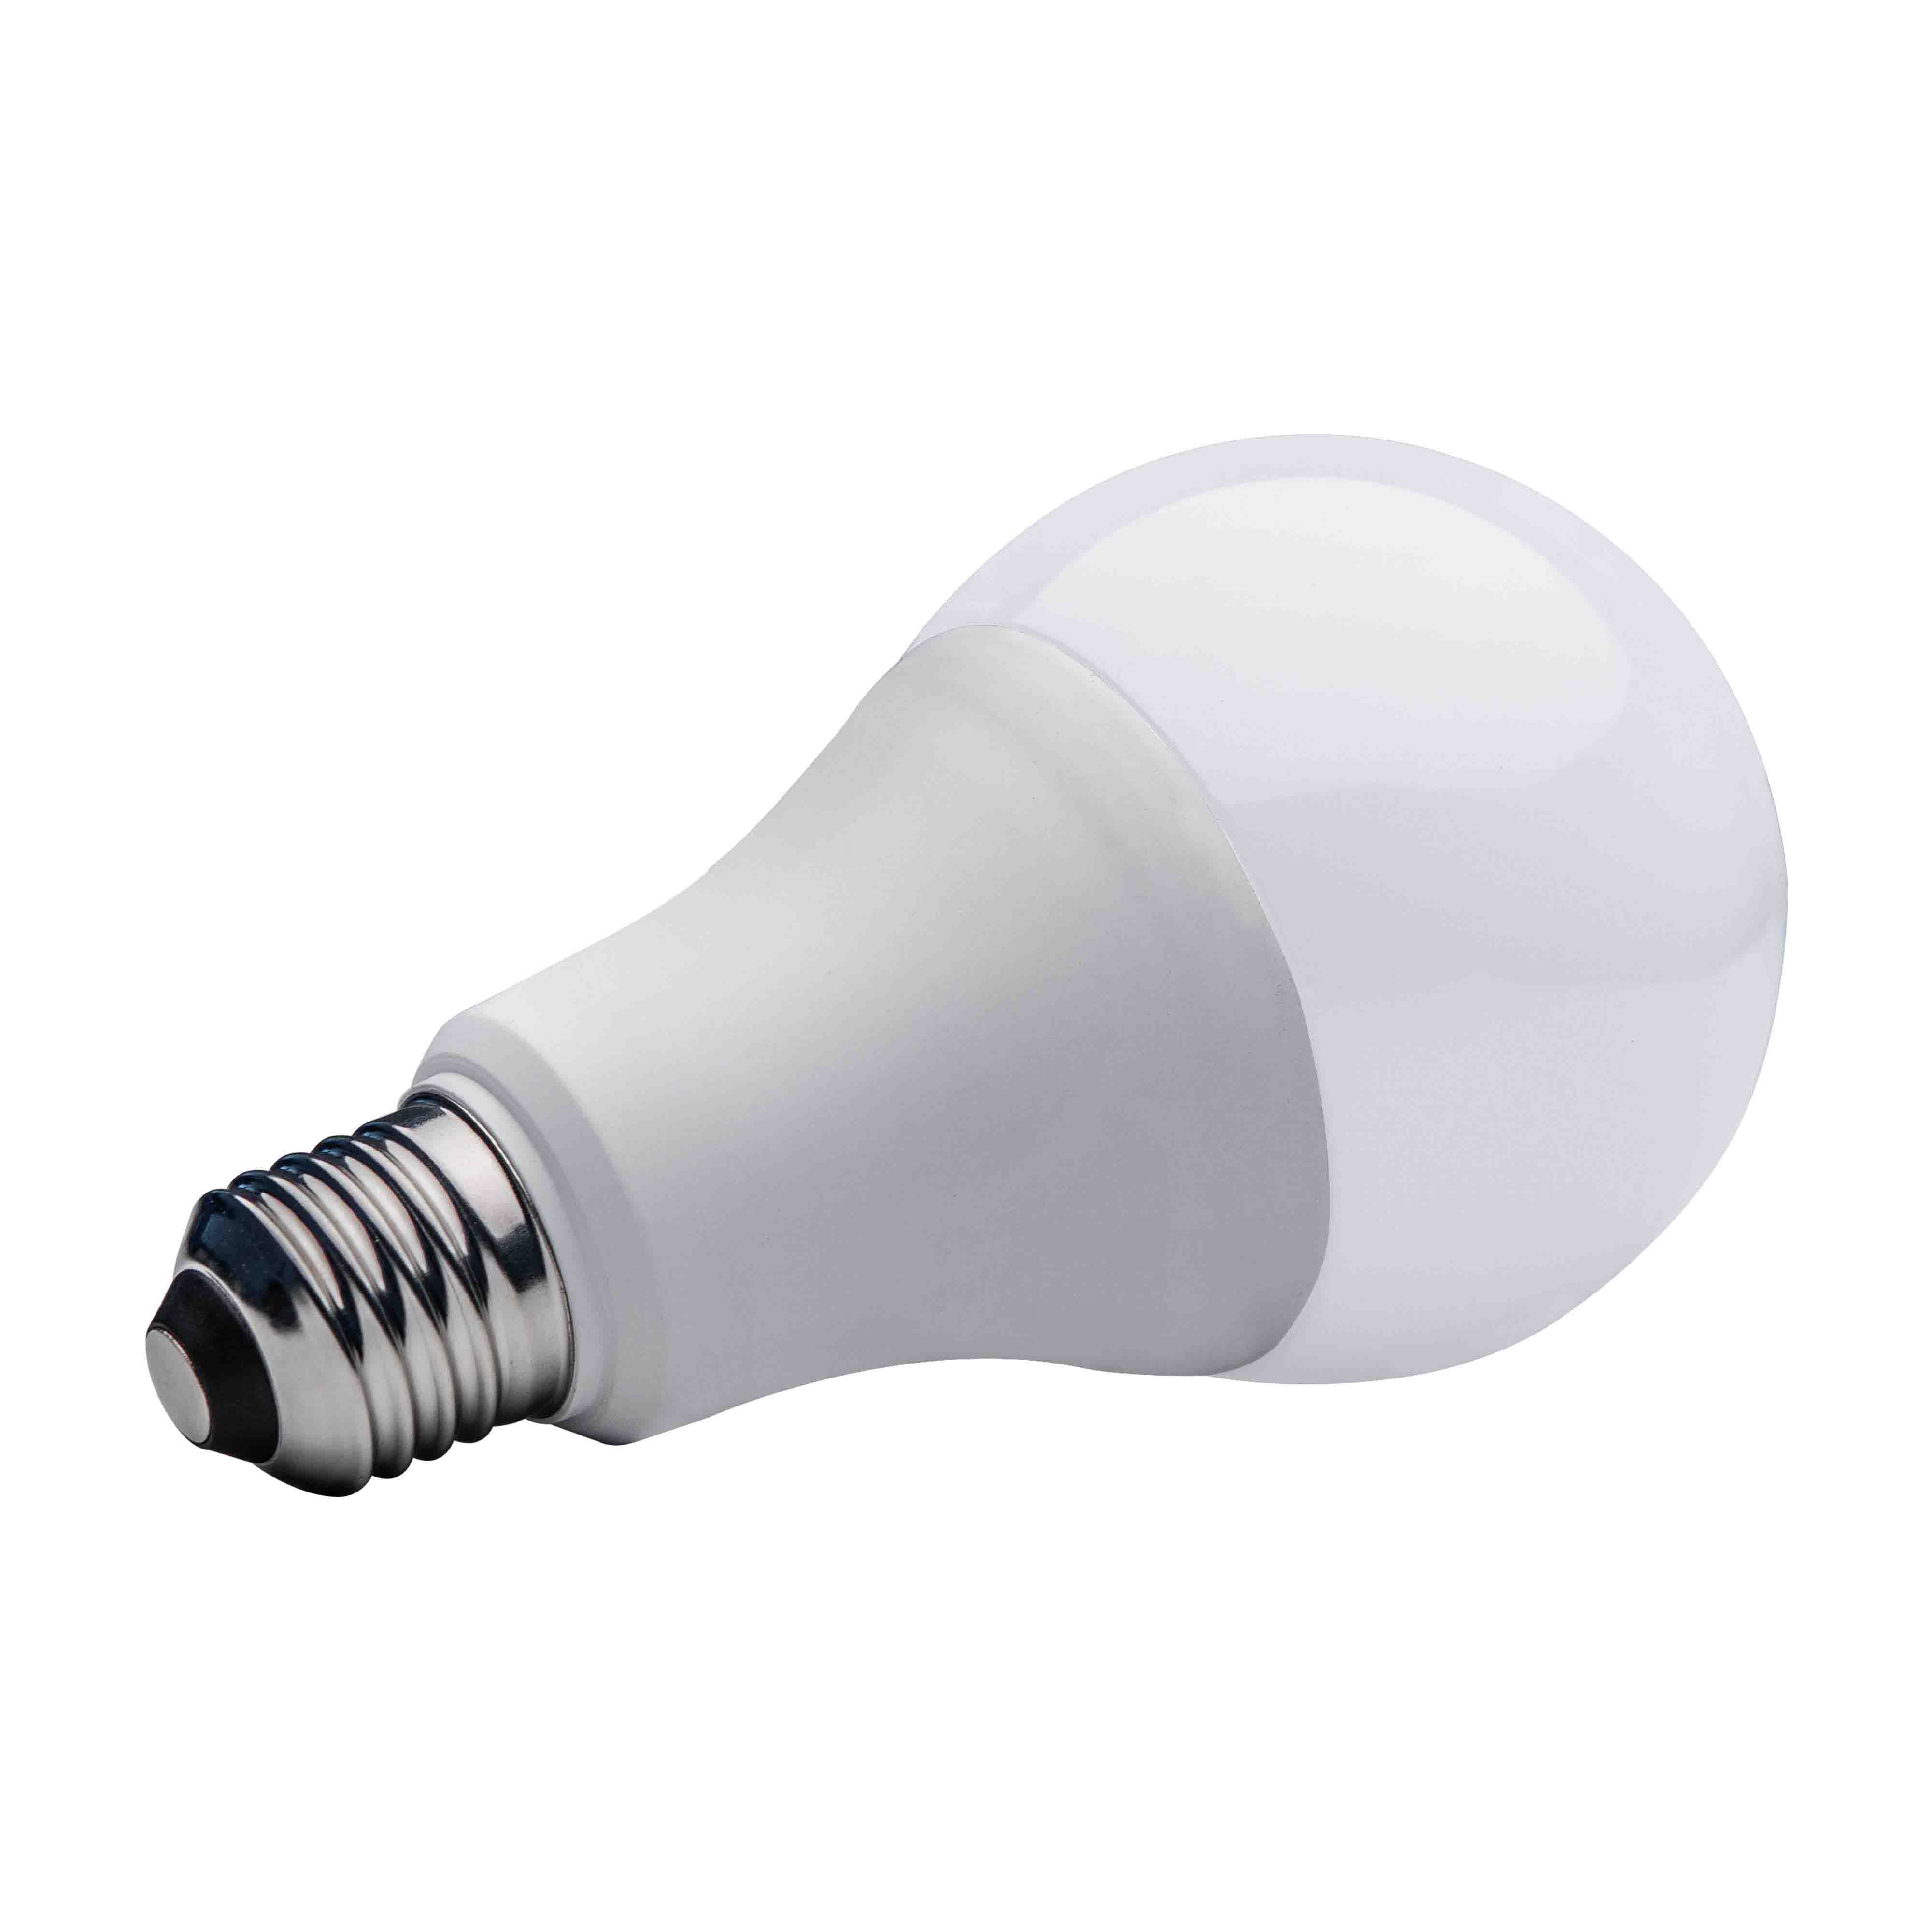 Complete Series A Shape LED Bulb